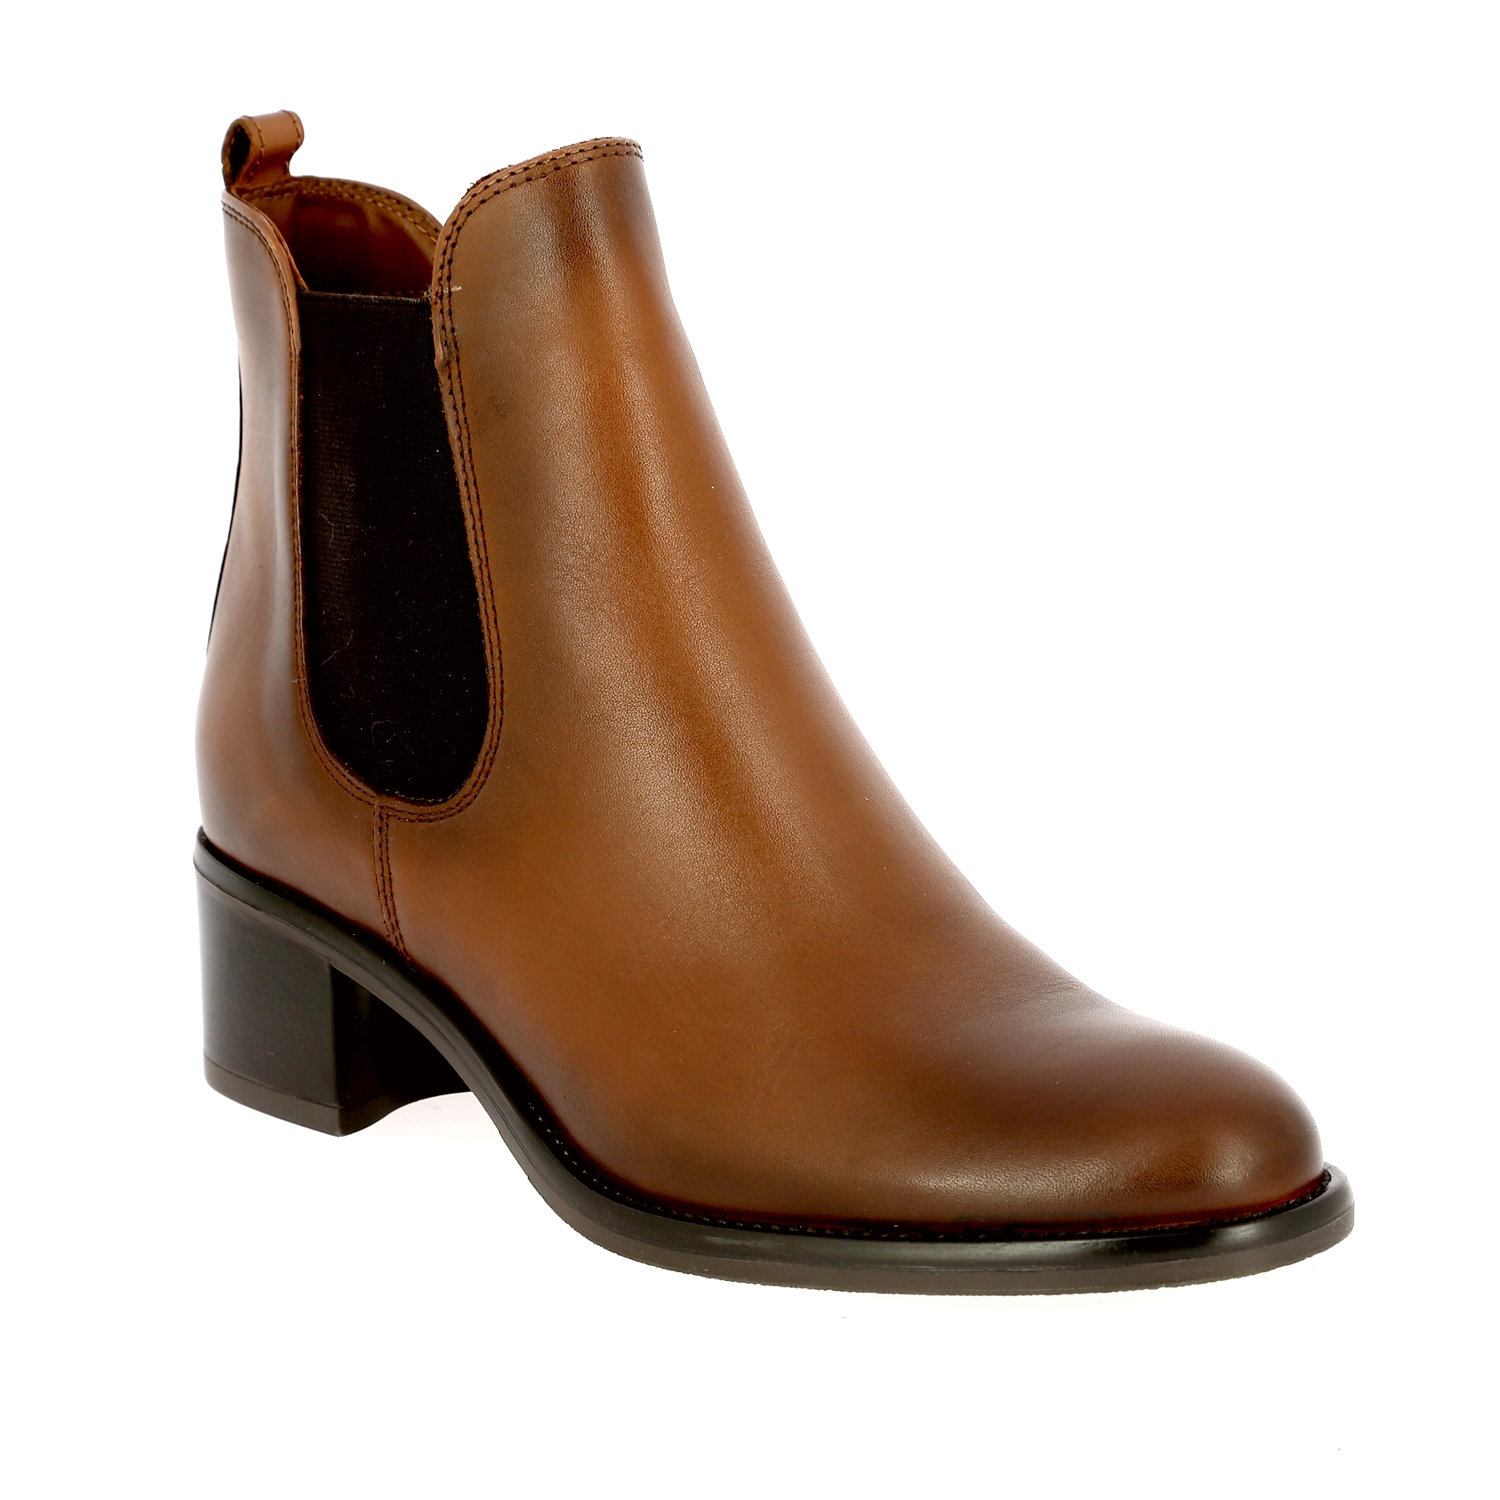 Gioia Boots brun